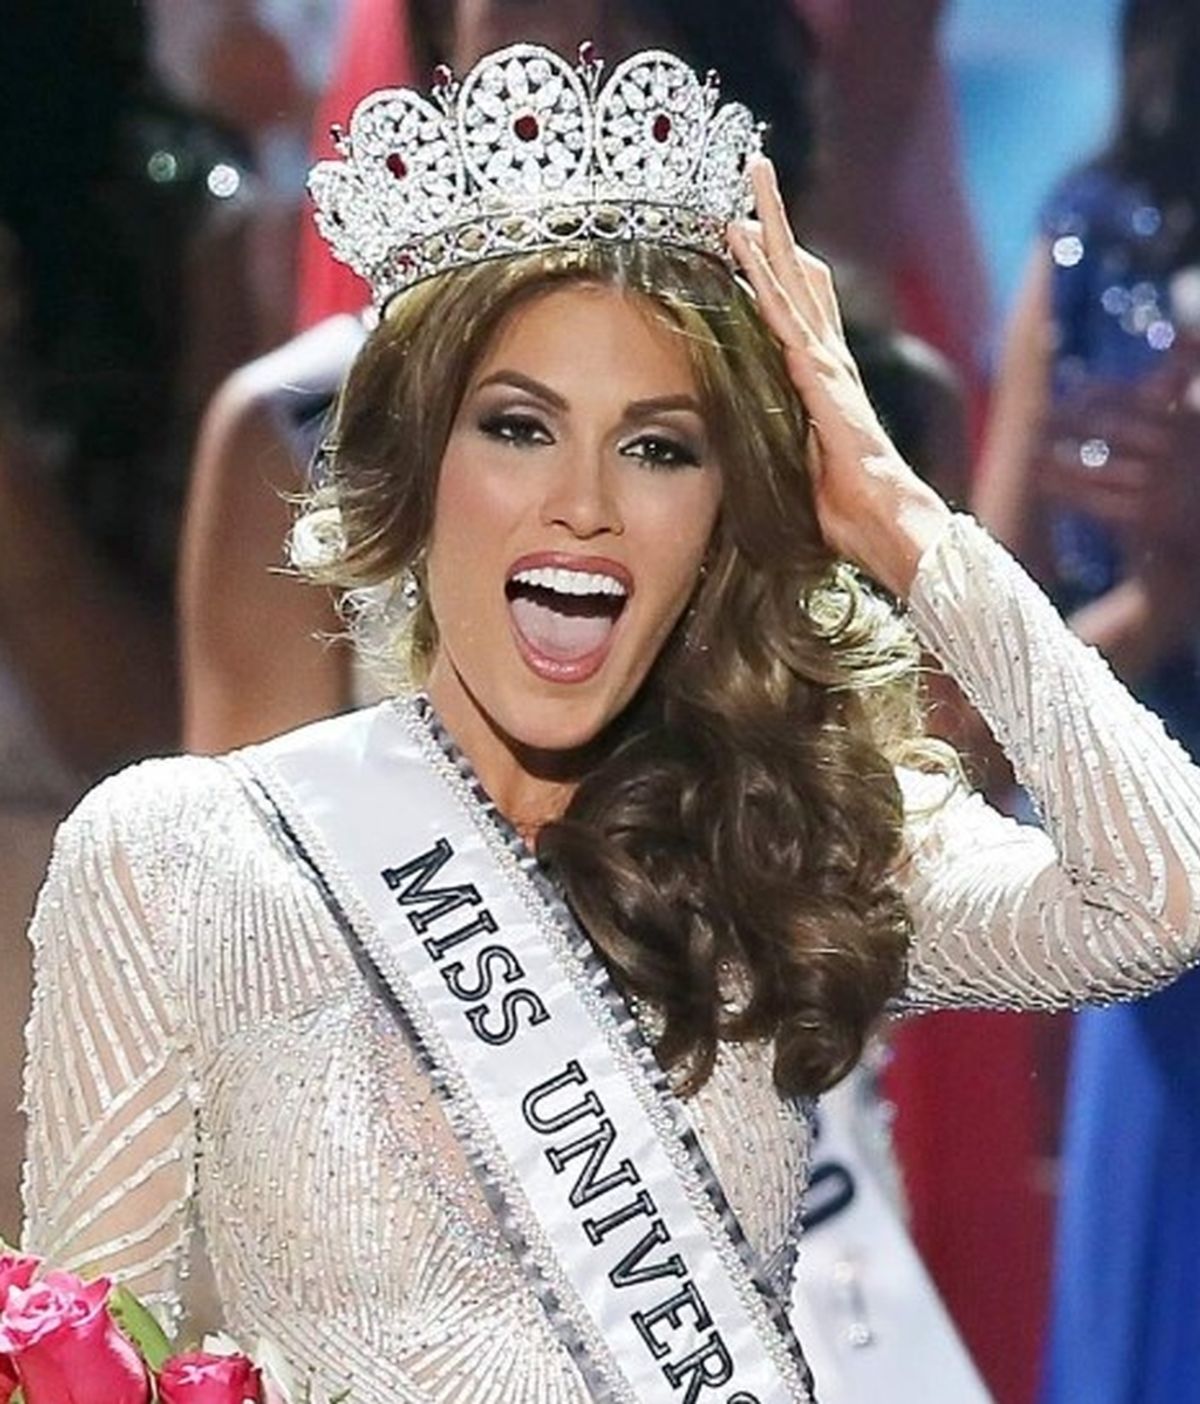 La venezolana Gabriela Isler, Miss Universo 2013